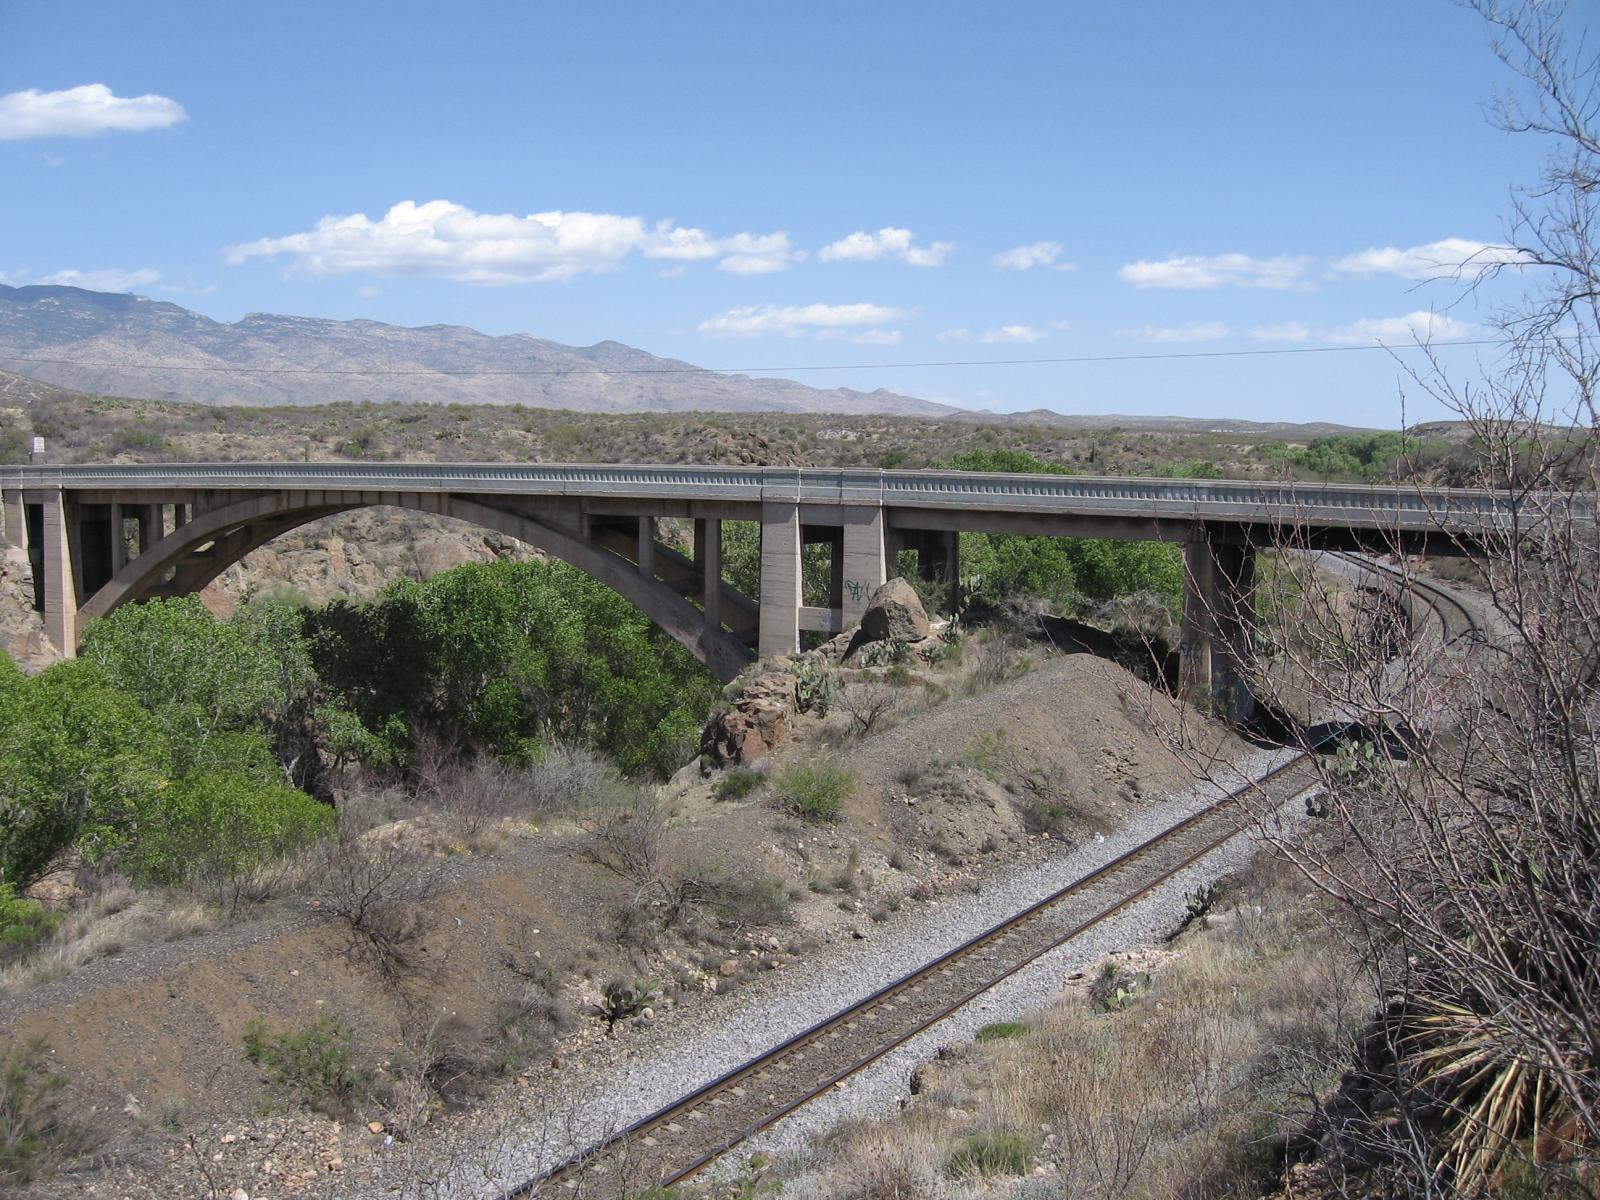 1921 Cienega Creek bridge between Tucson and Benson AZ